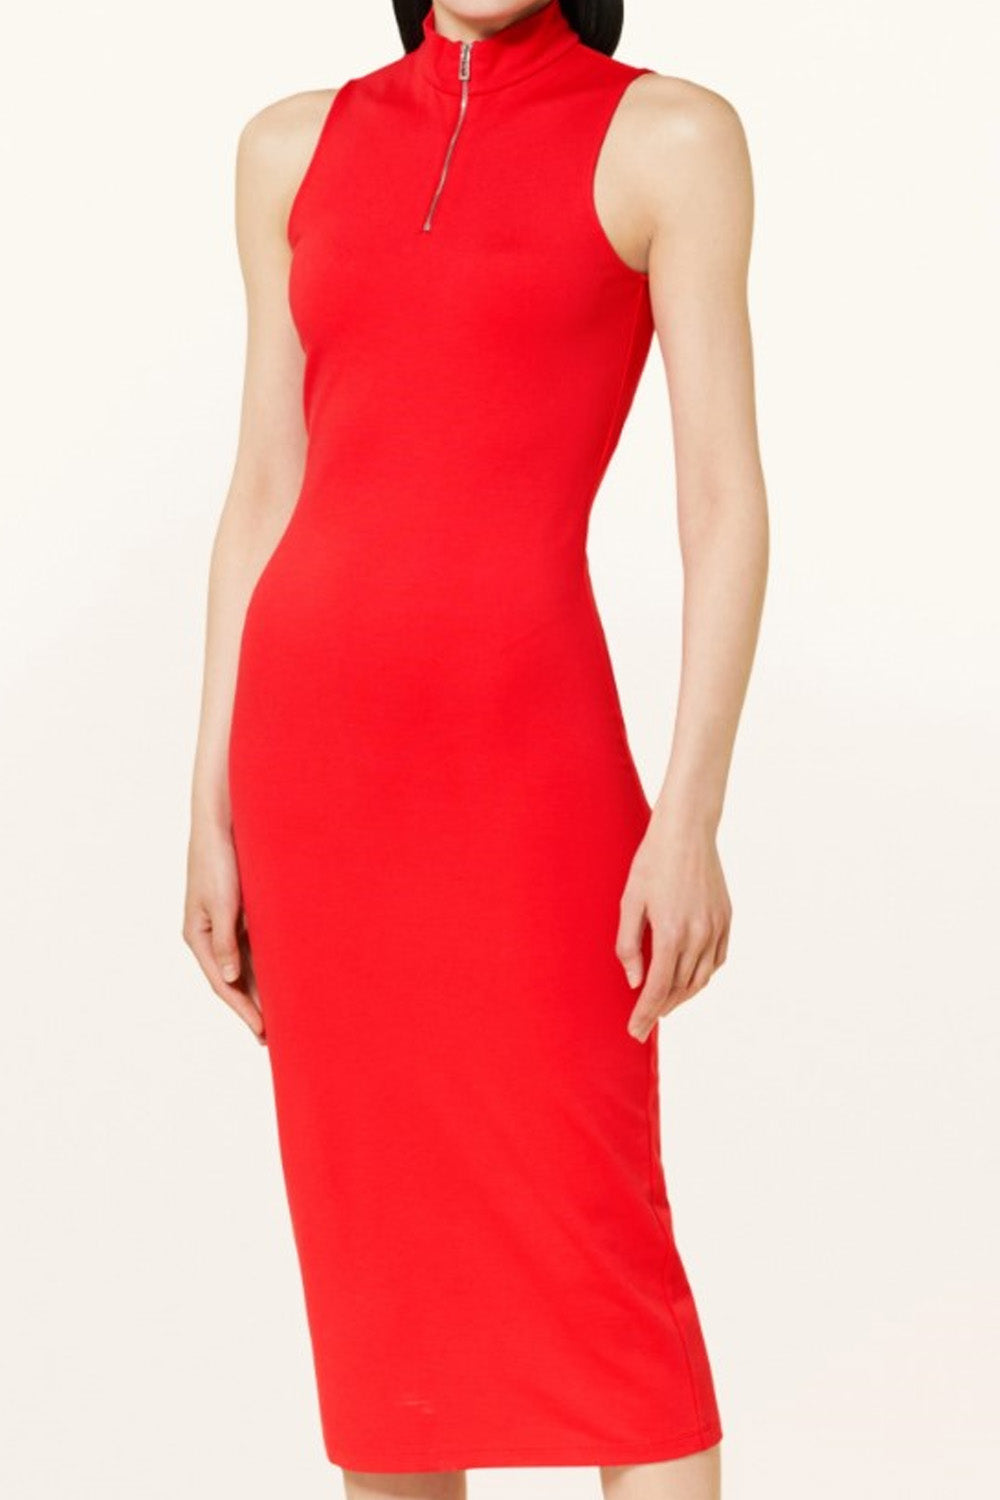 Terrain Red Dress